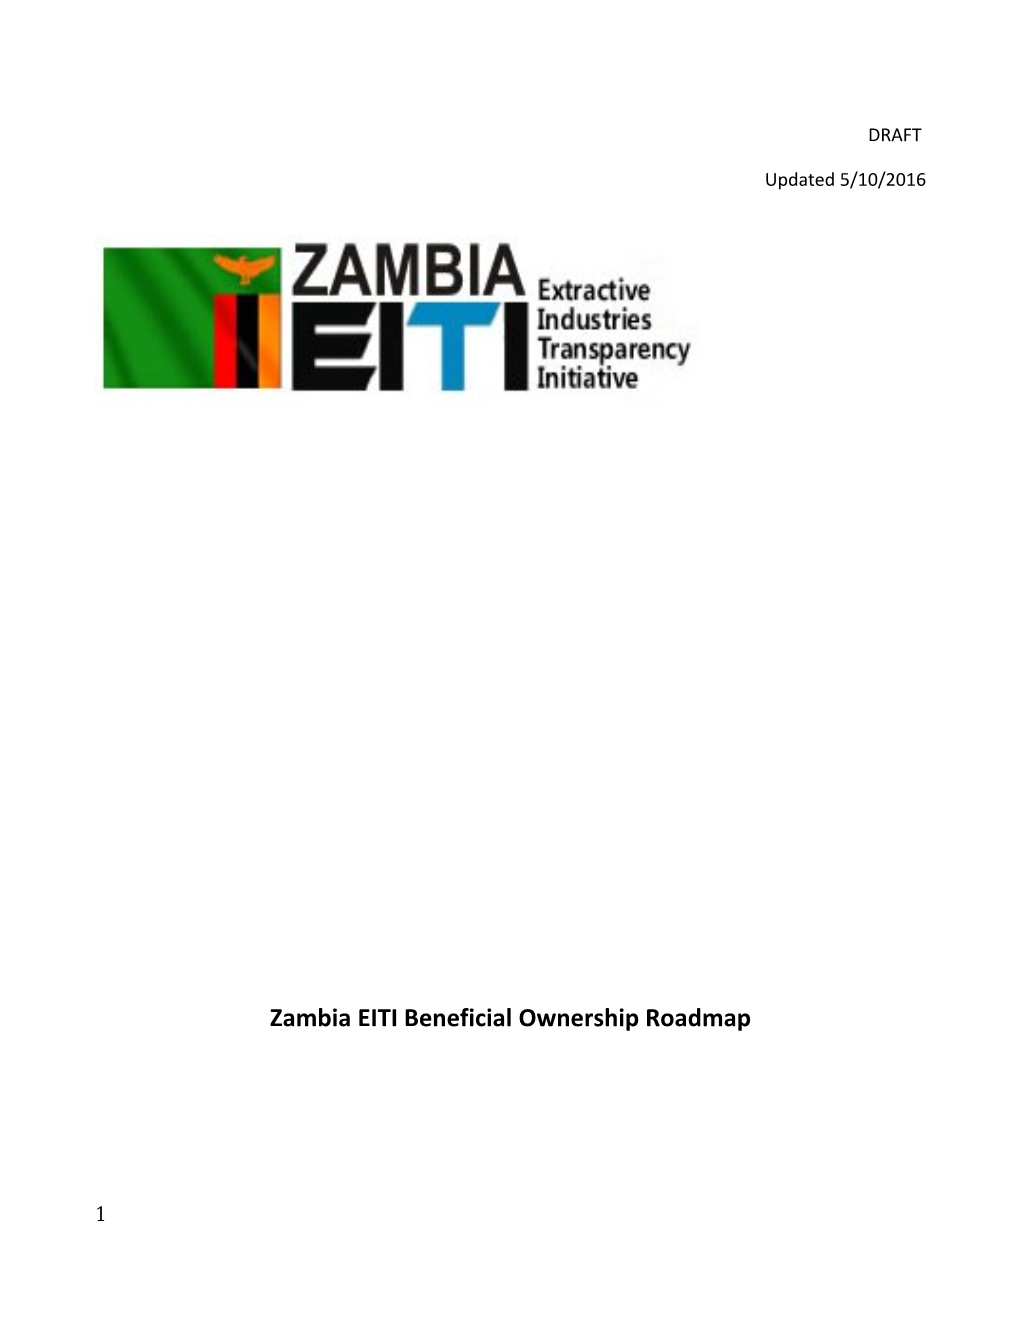 Zambia EITI Beneficial Ownership Roadmap